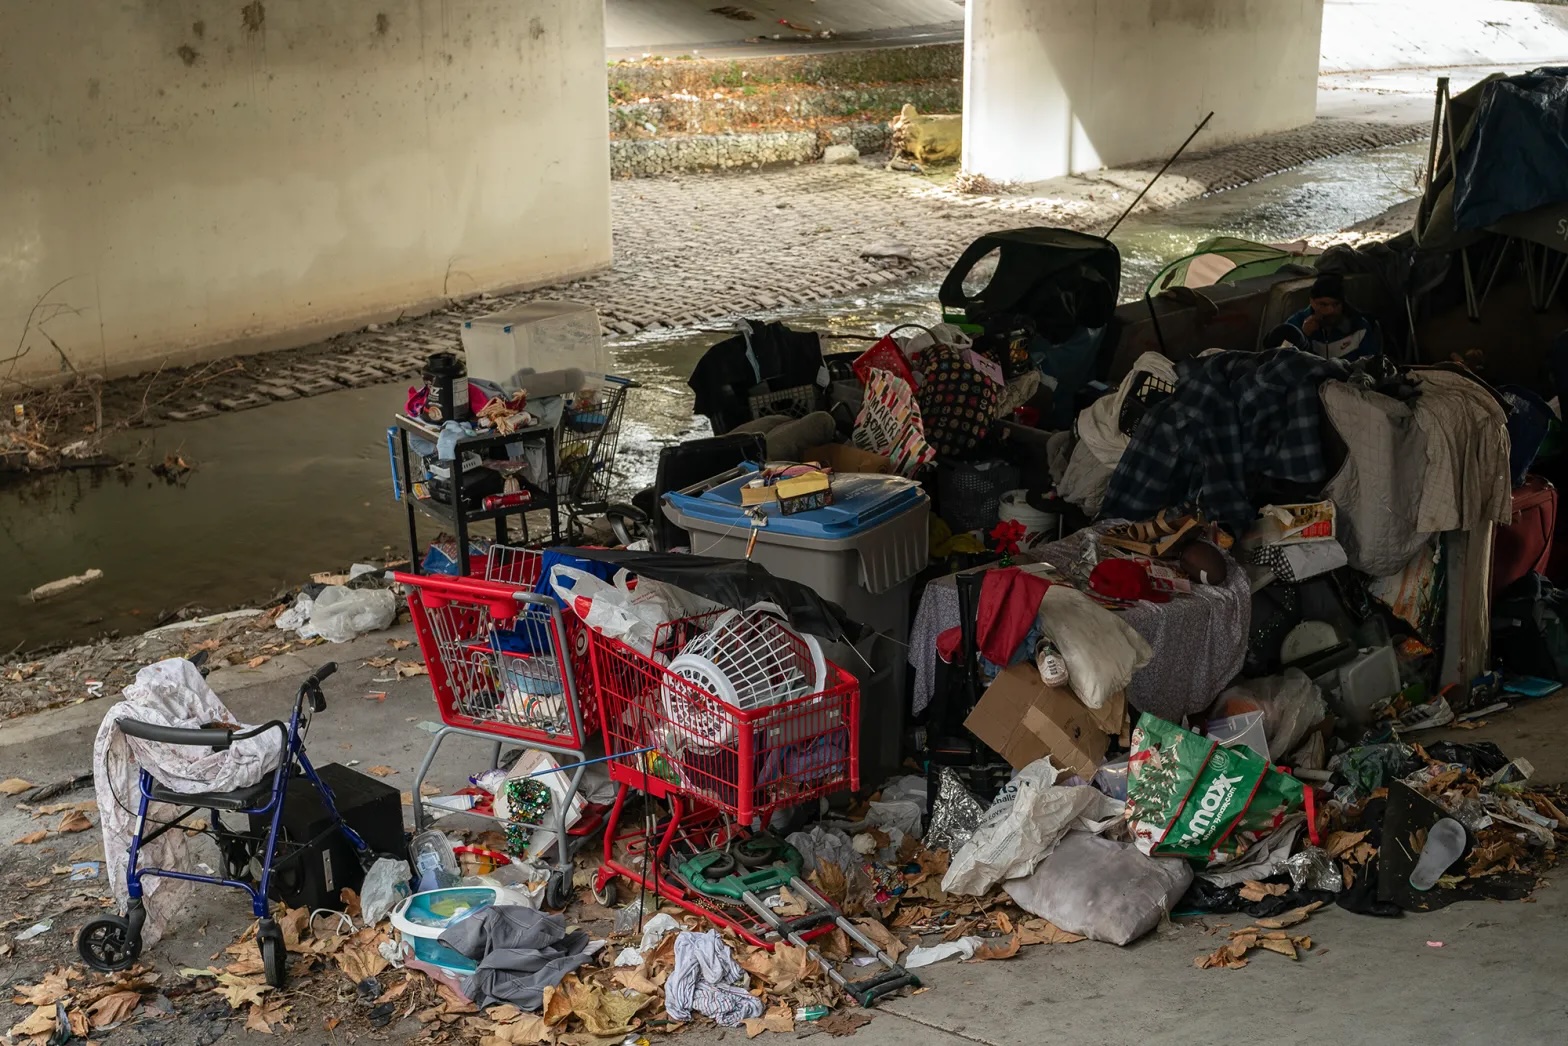 A homeless encampment under a bridge with discarded items strewn around.